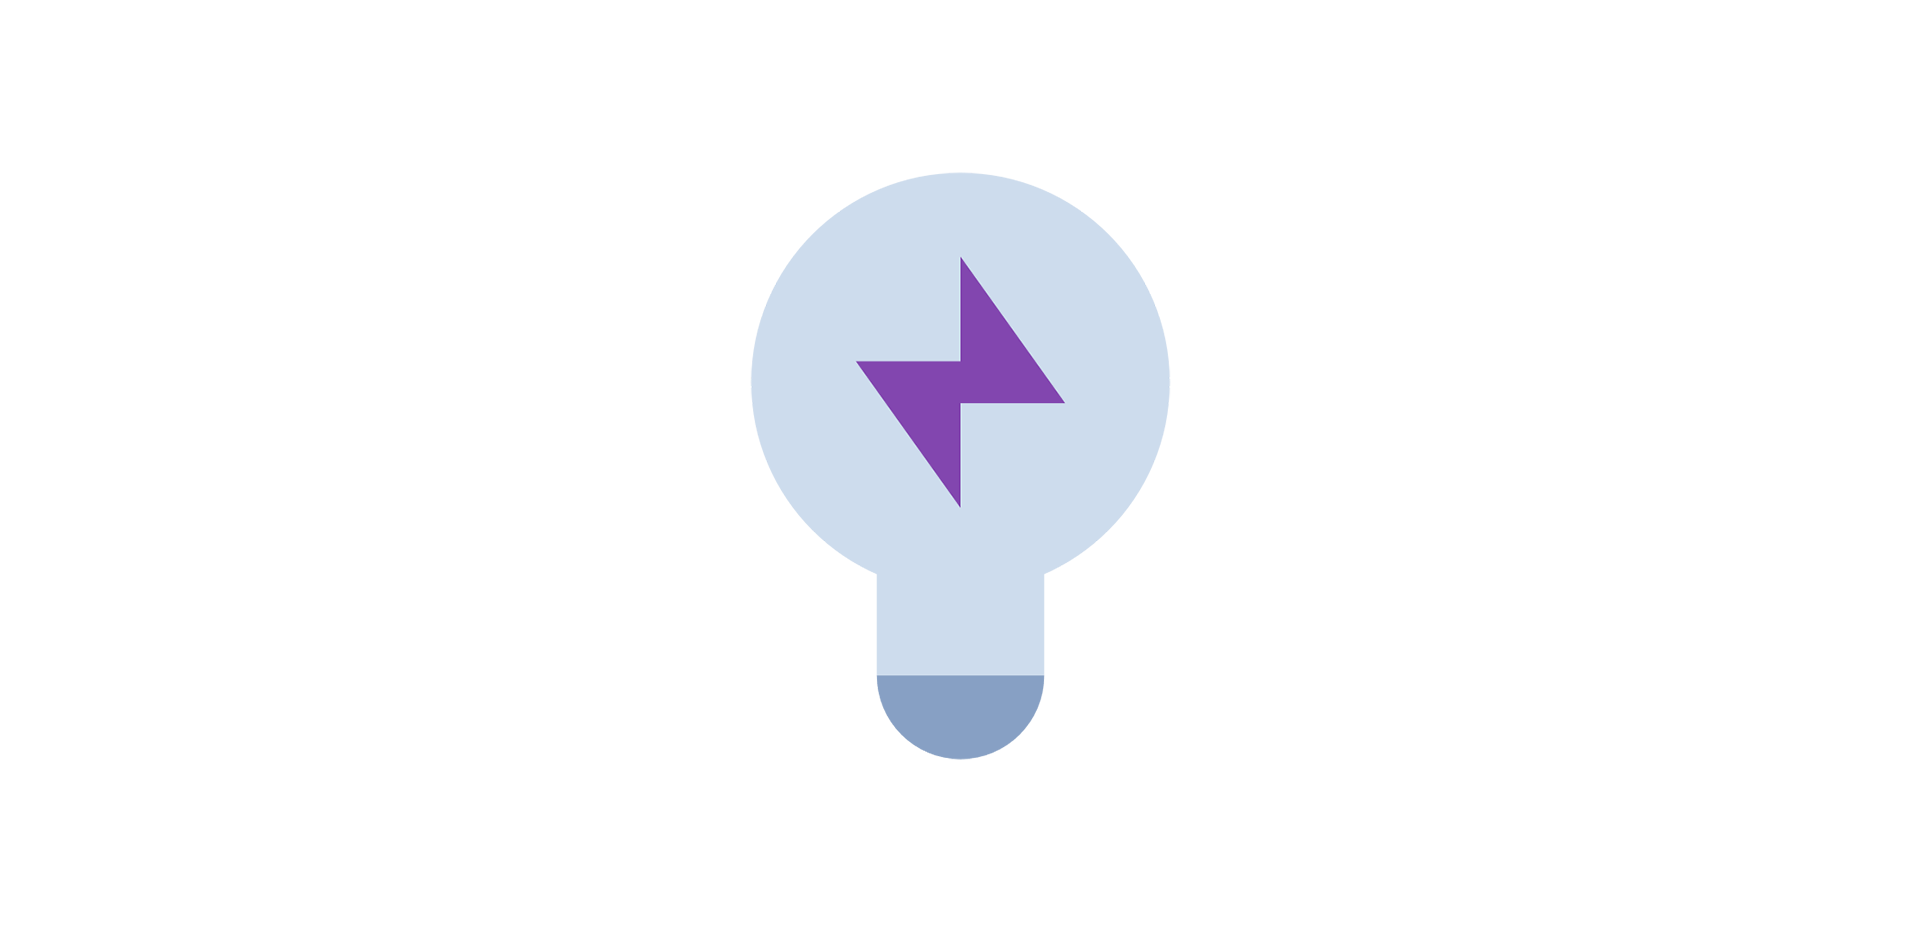 Lightbulb icon with a purple lightning bolt inside it